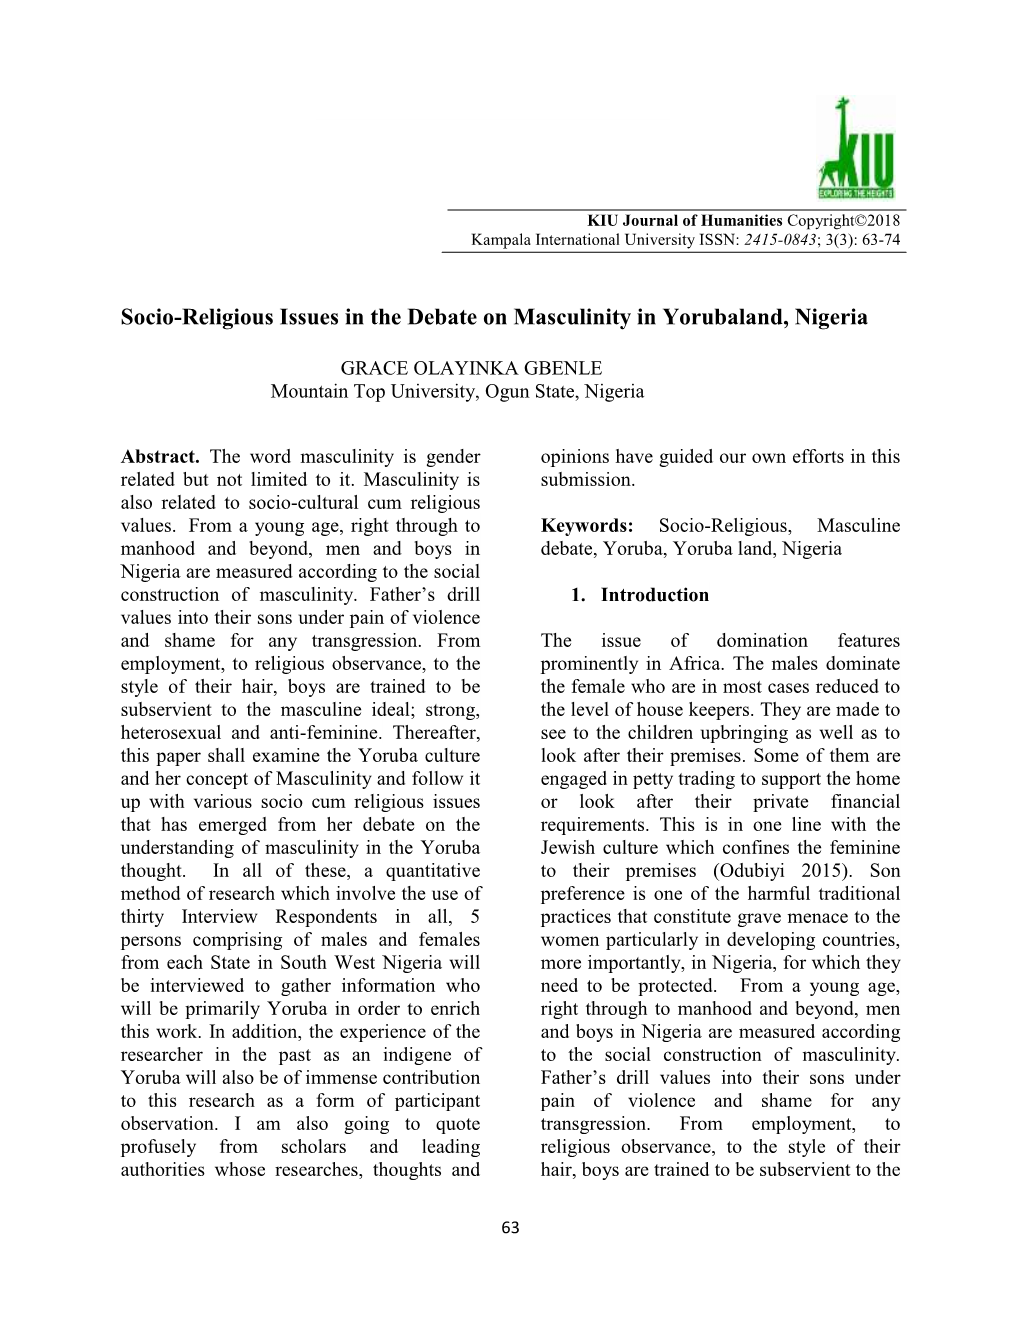 Socio-Religious Issues in the Debate on Masculinity in Yorubaland, Nigeria